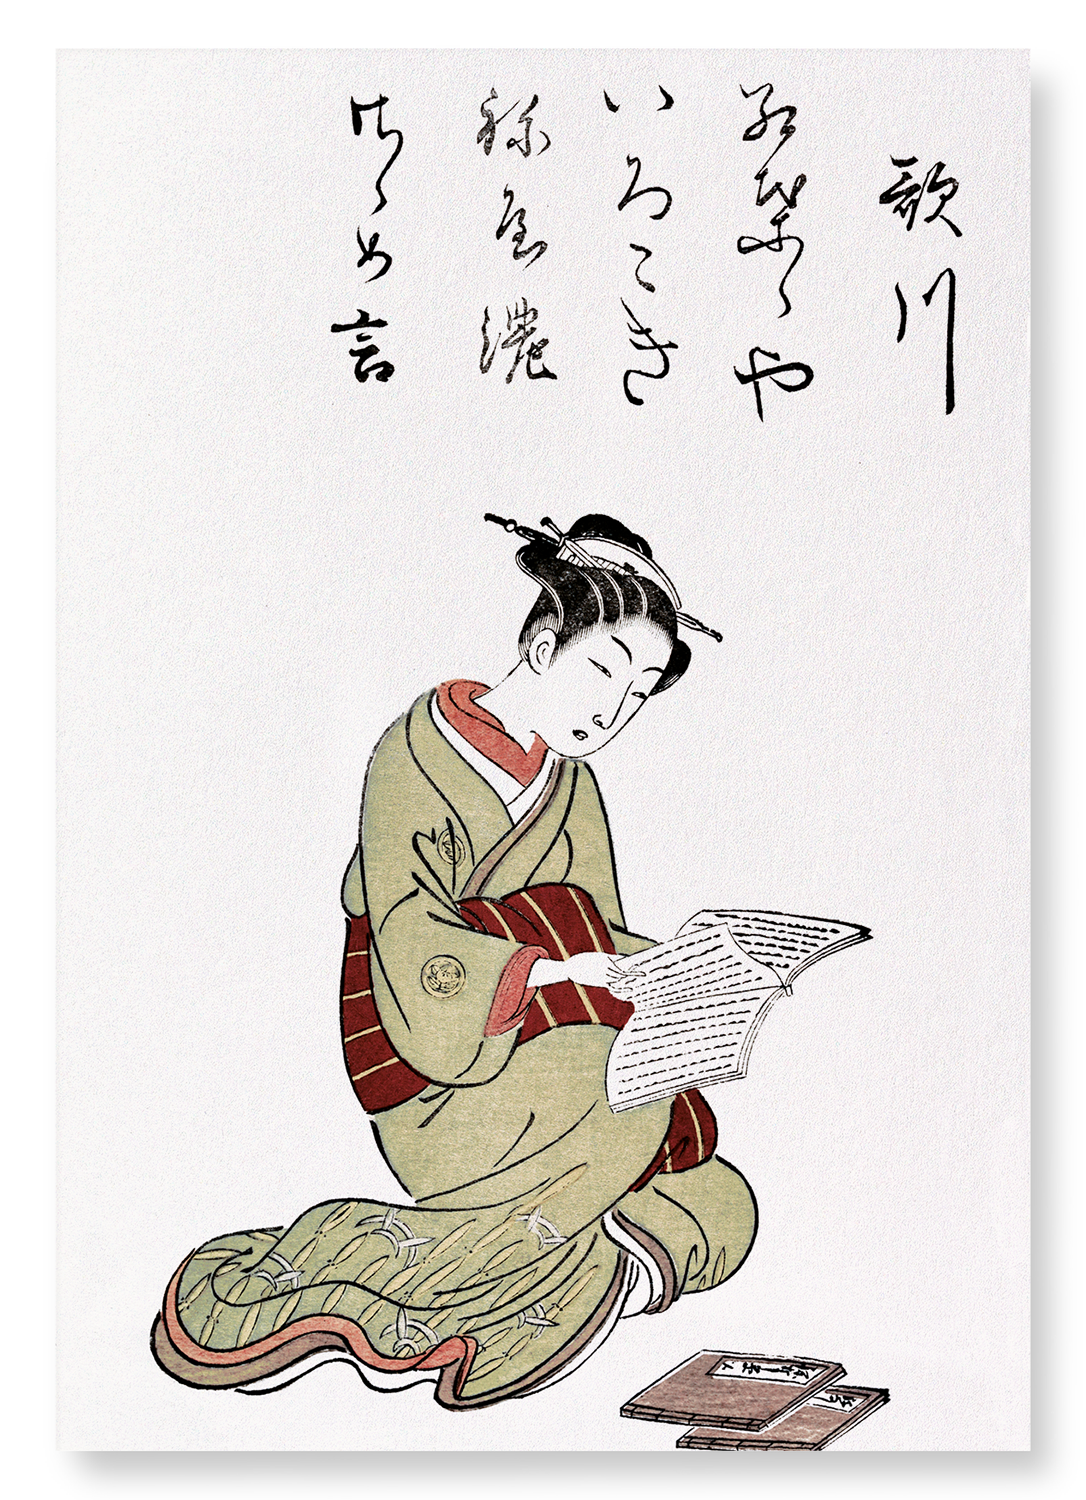 COURTESAN UTAGAWA READING (1776)